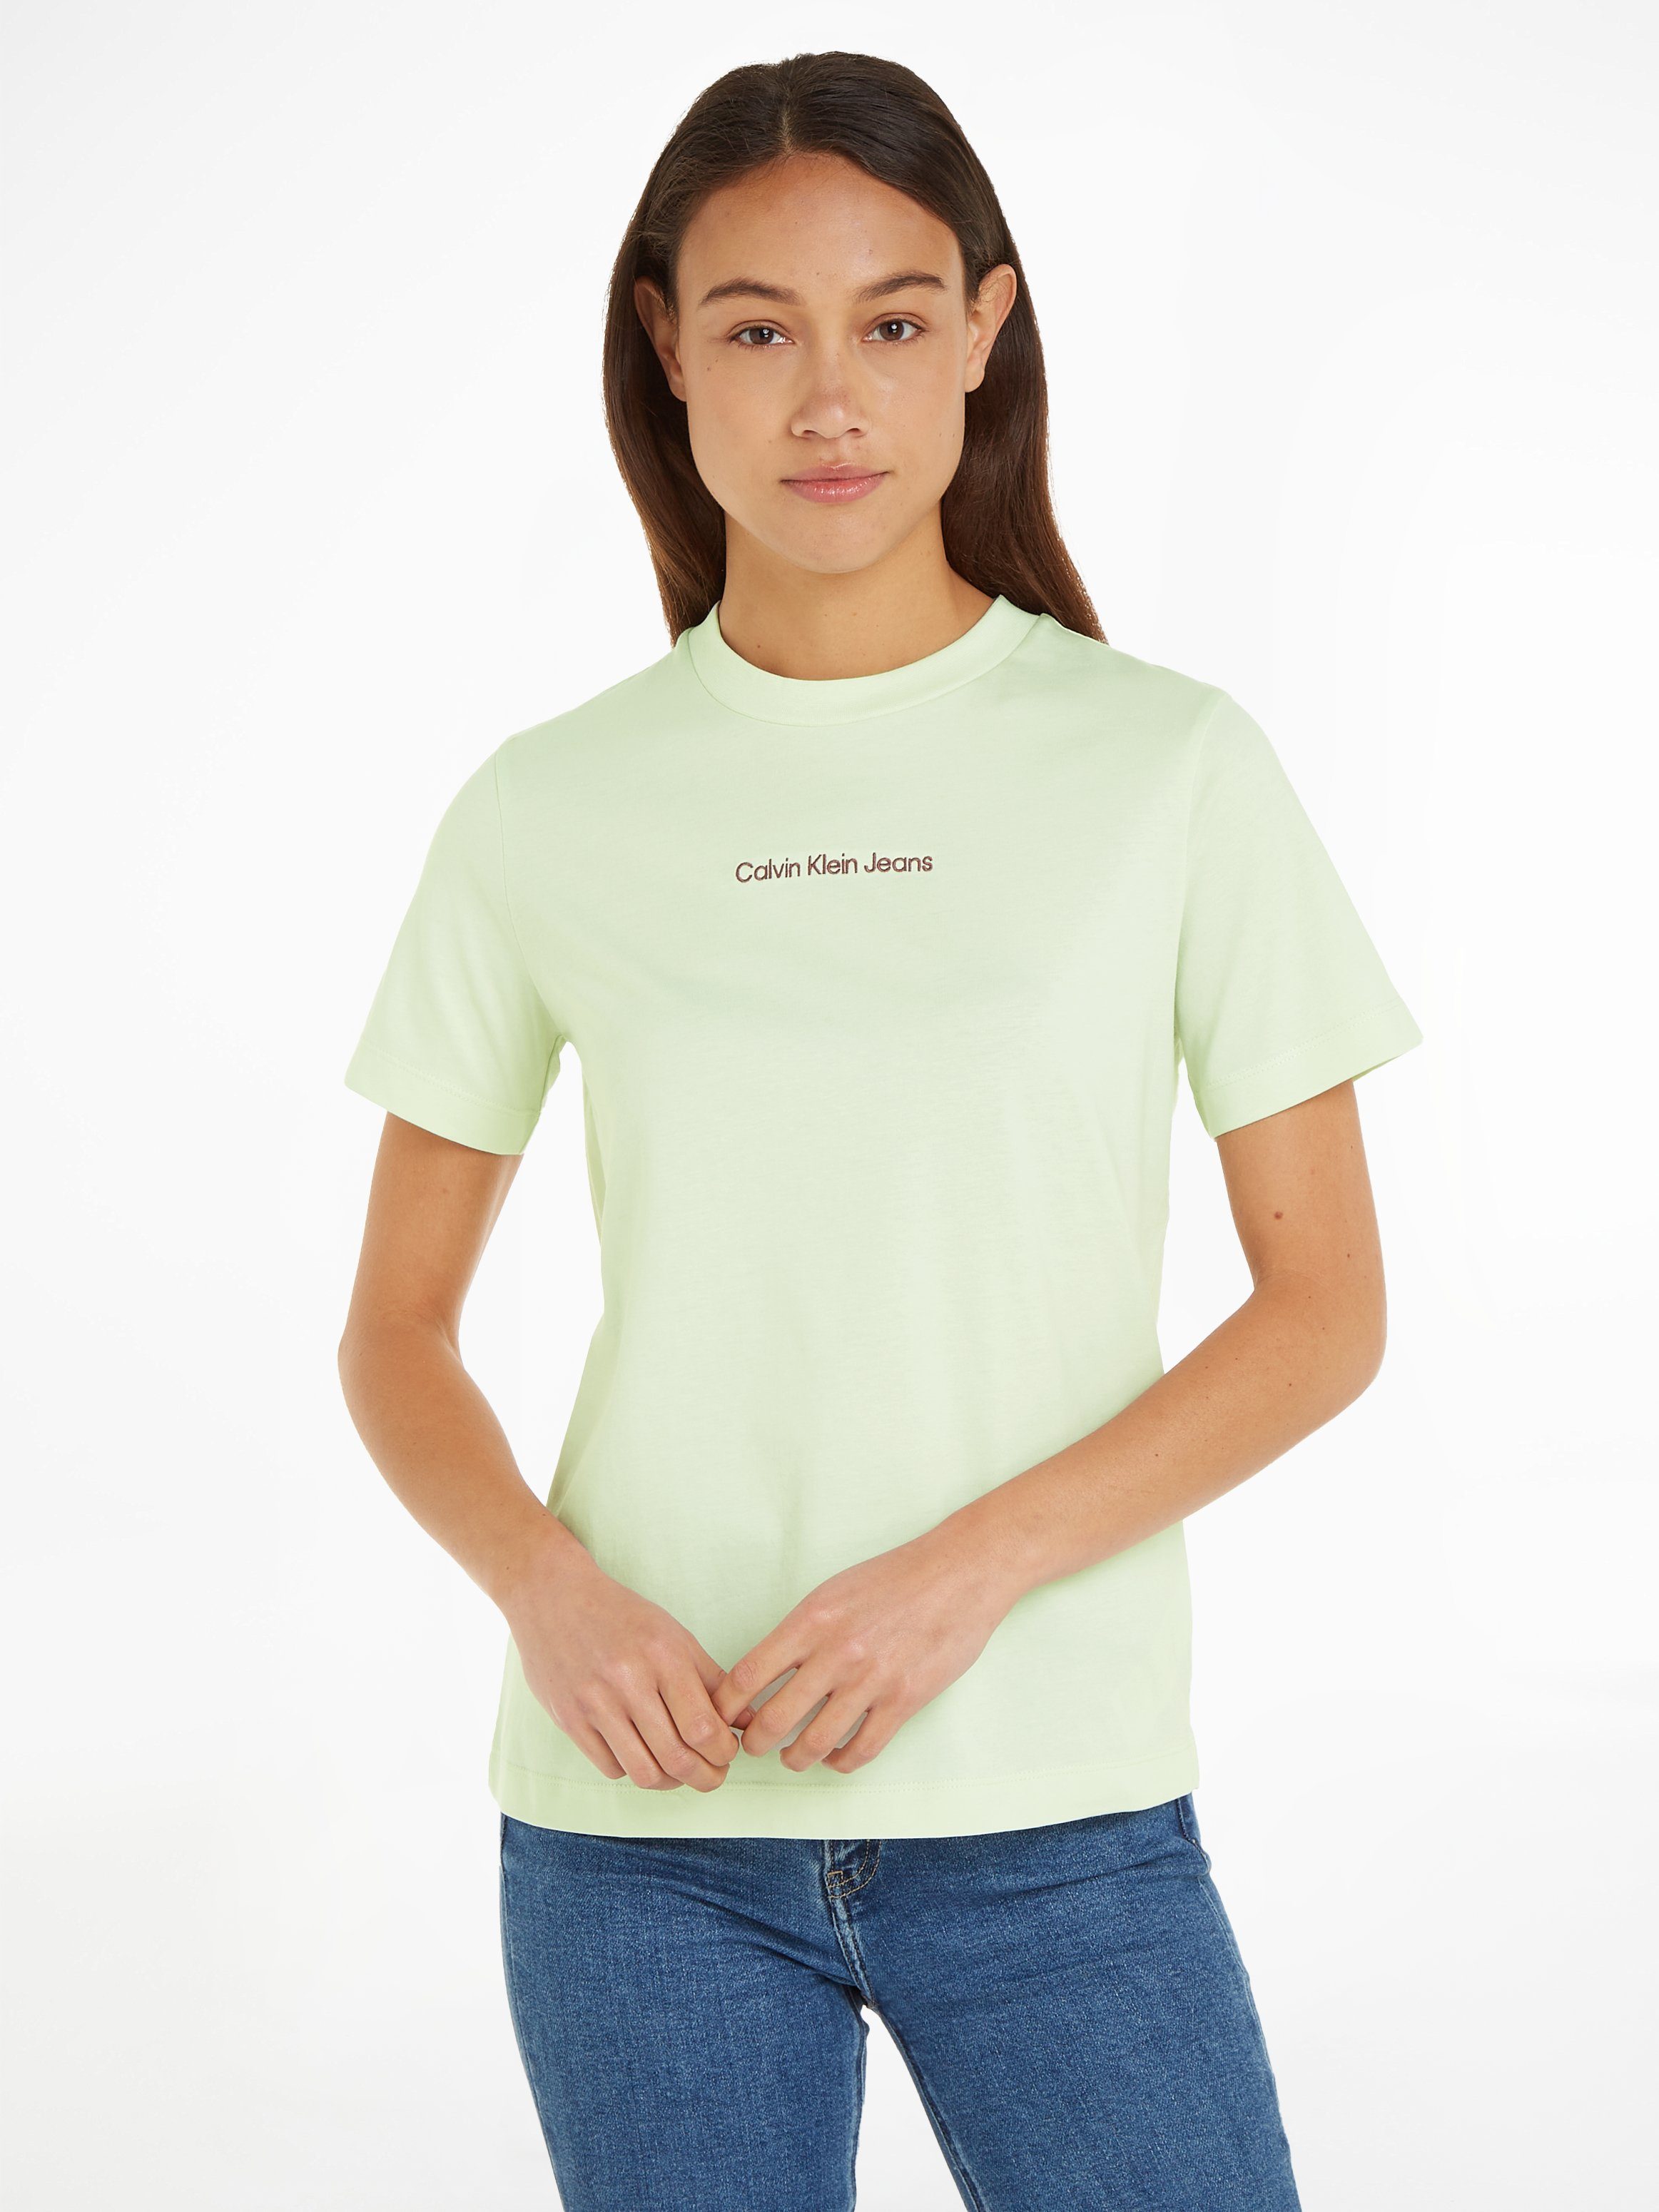 INSTITUTIONAL Klein STRAIGHT Green Canary Markenlabel T-Shirt TEE Amaranth Calvin / Jeans mit